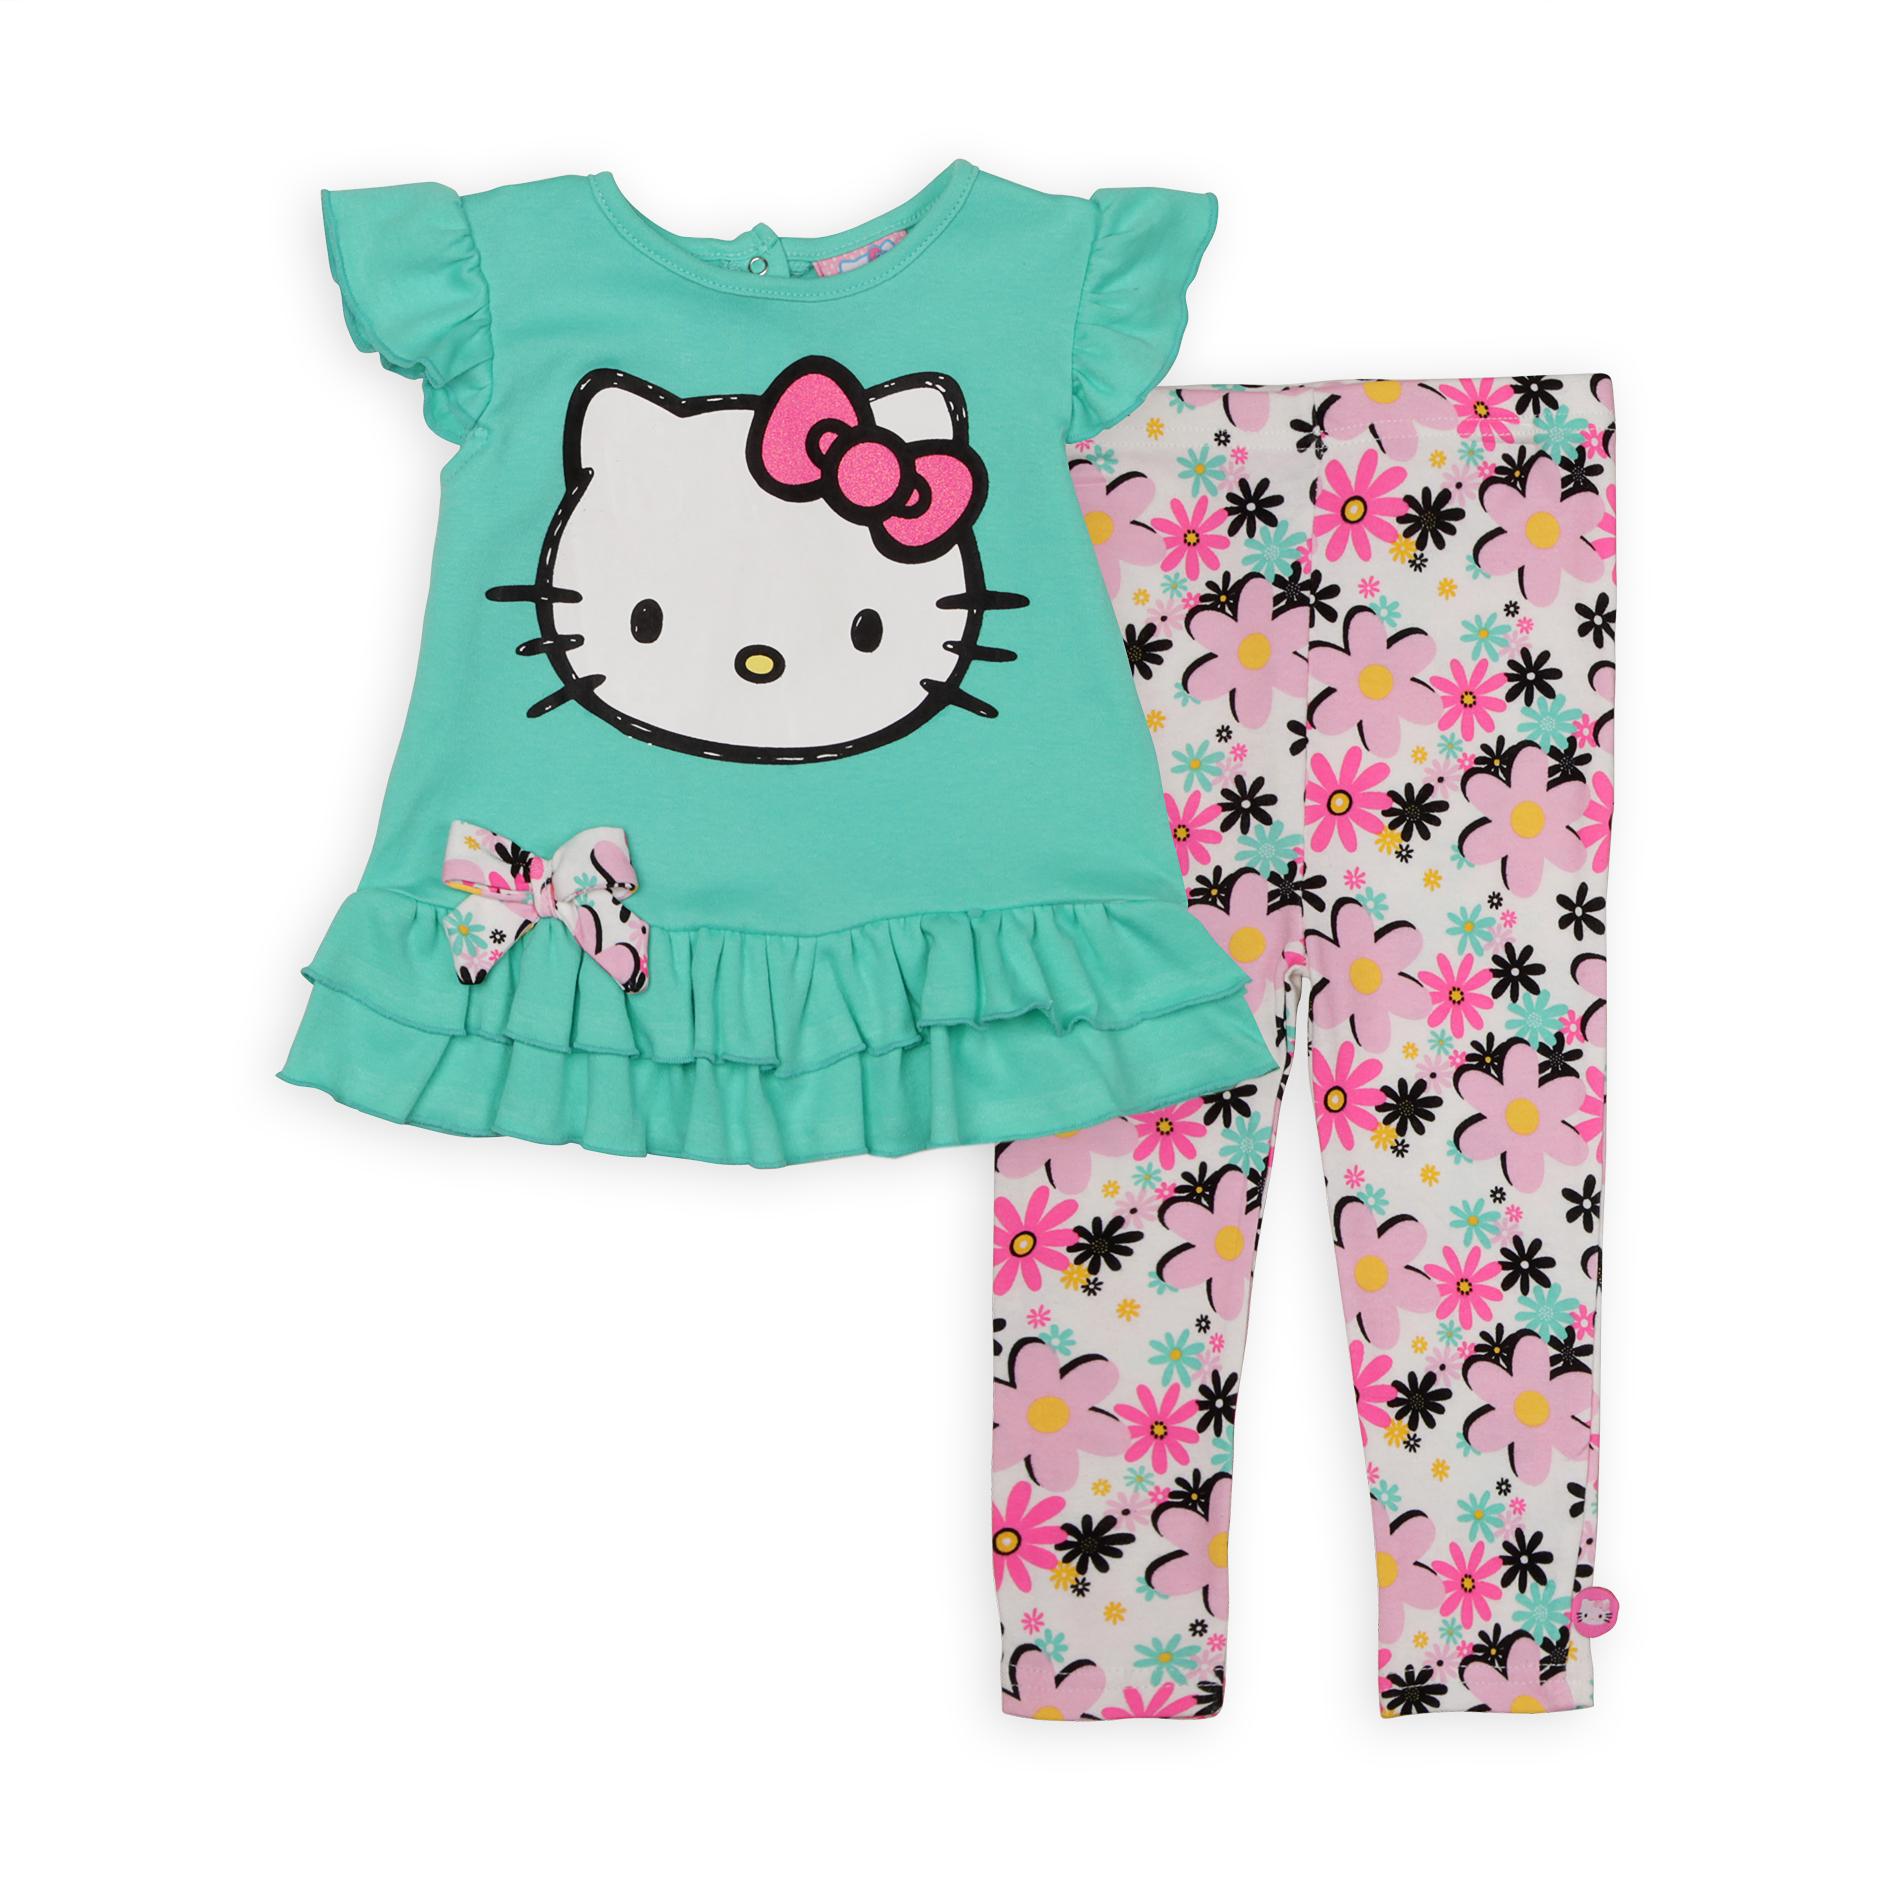 Hello Kitty Infant & Toddler Girl's Ruffle Top & Leggings - Floral